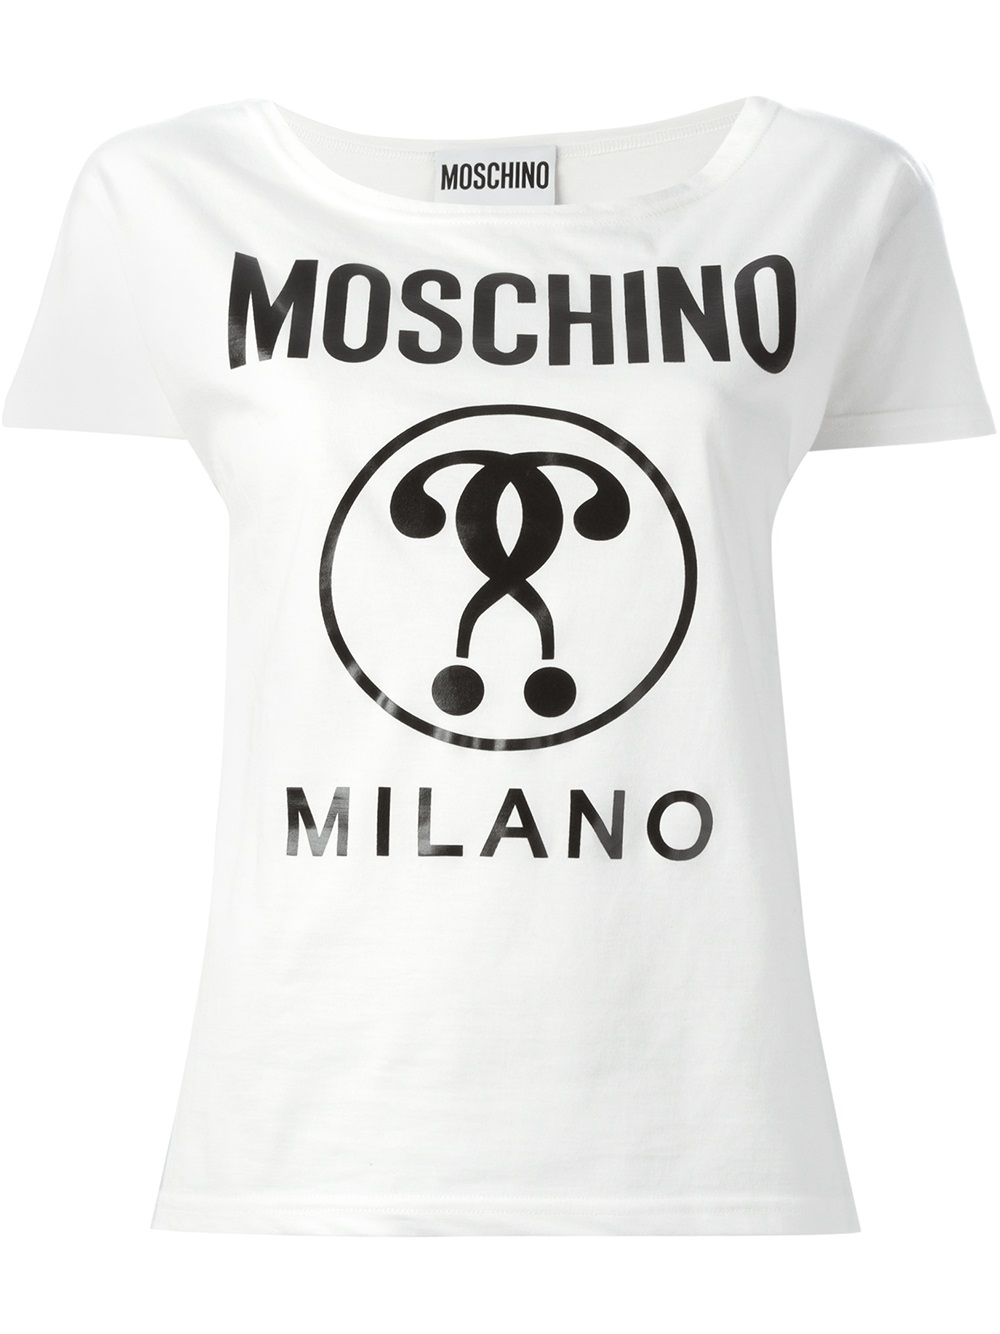 Moschino Milano Print T.shirt in Black | Lyst